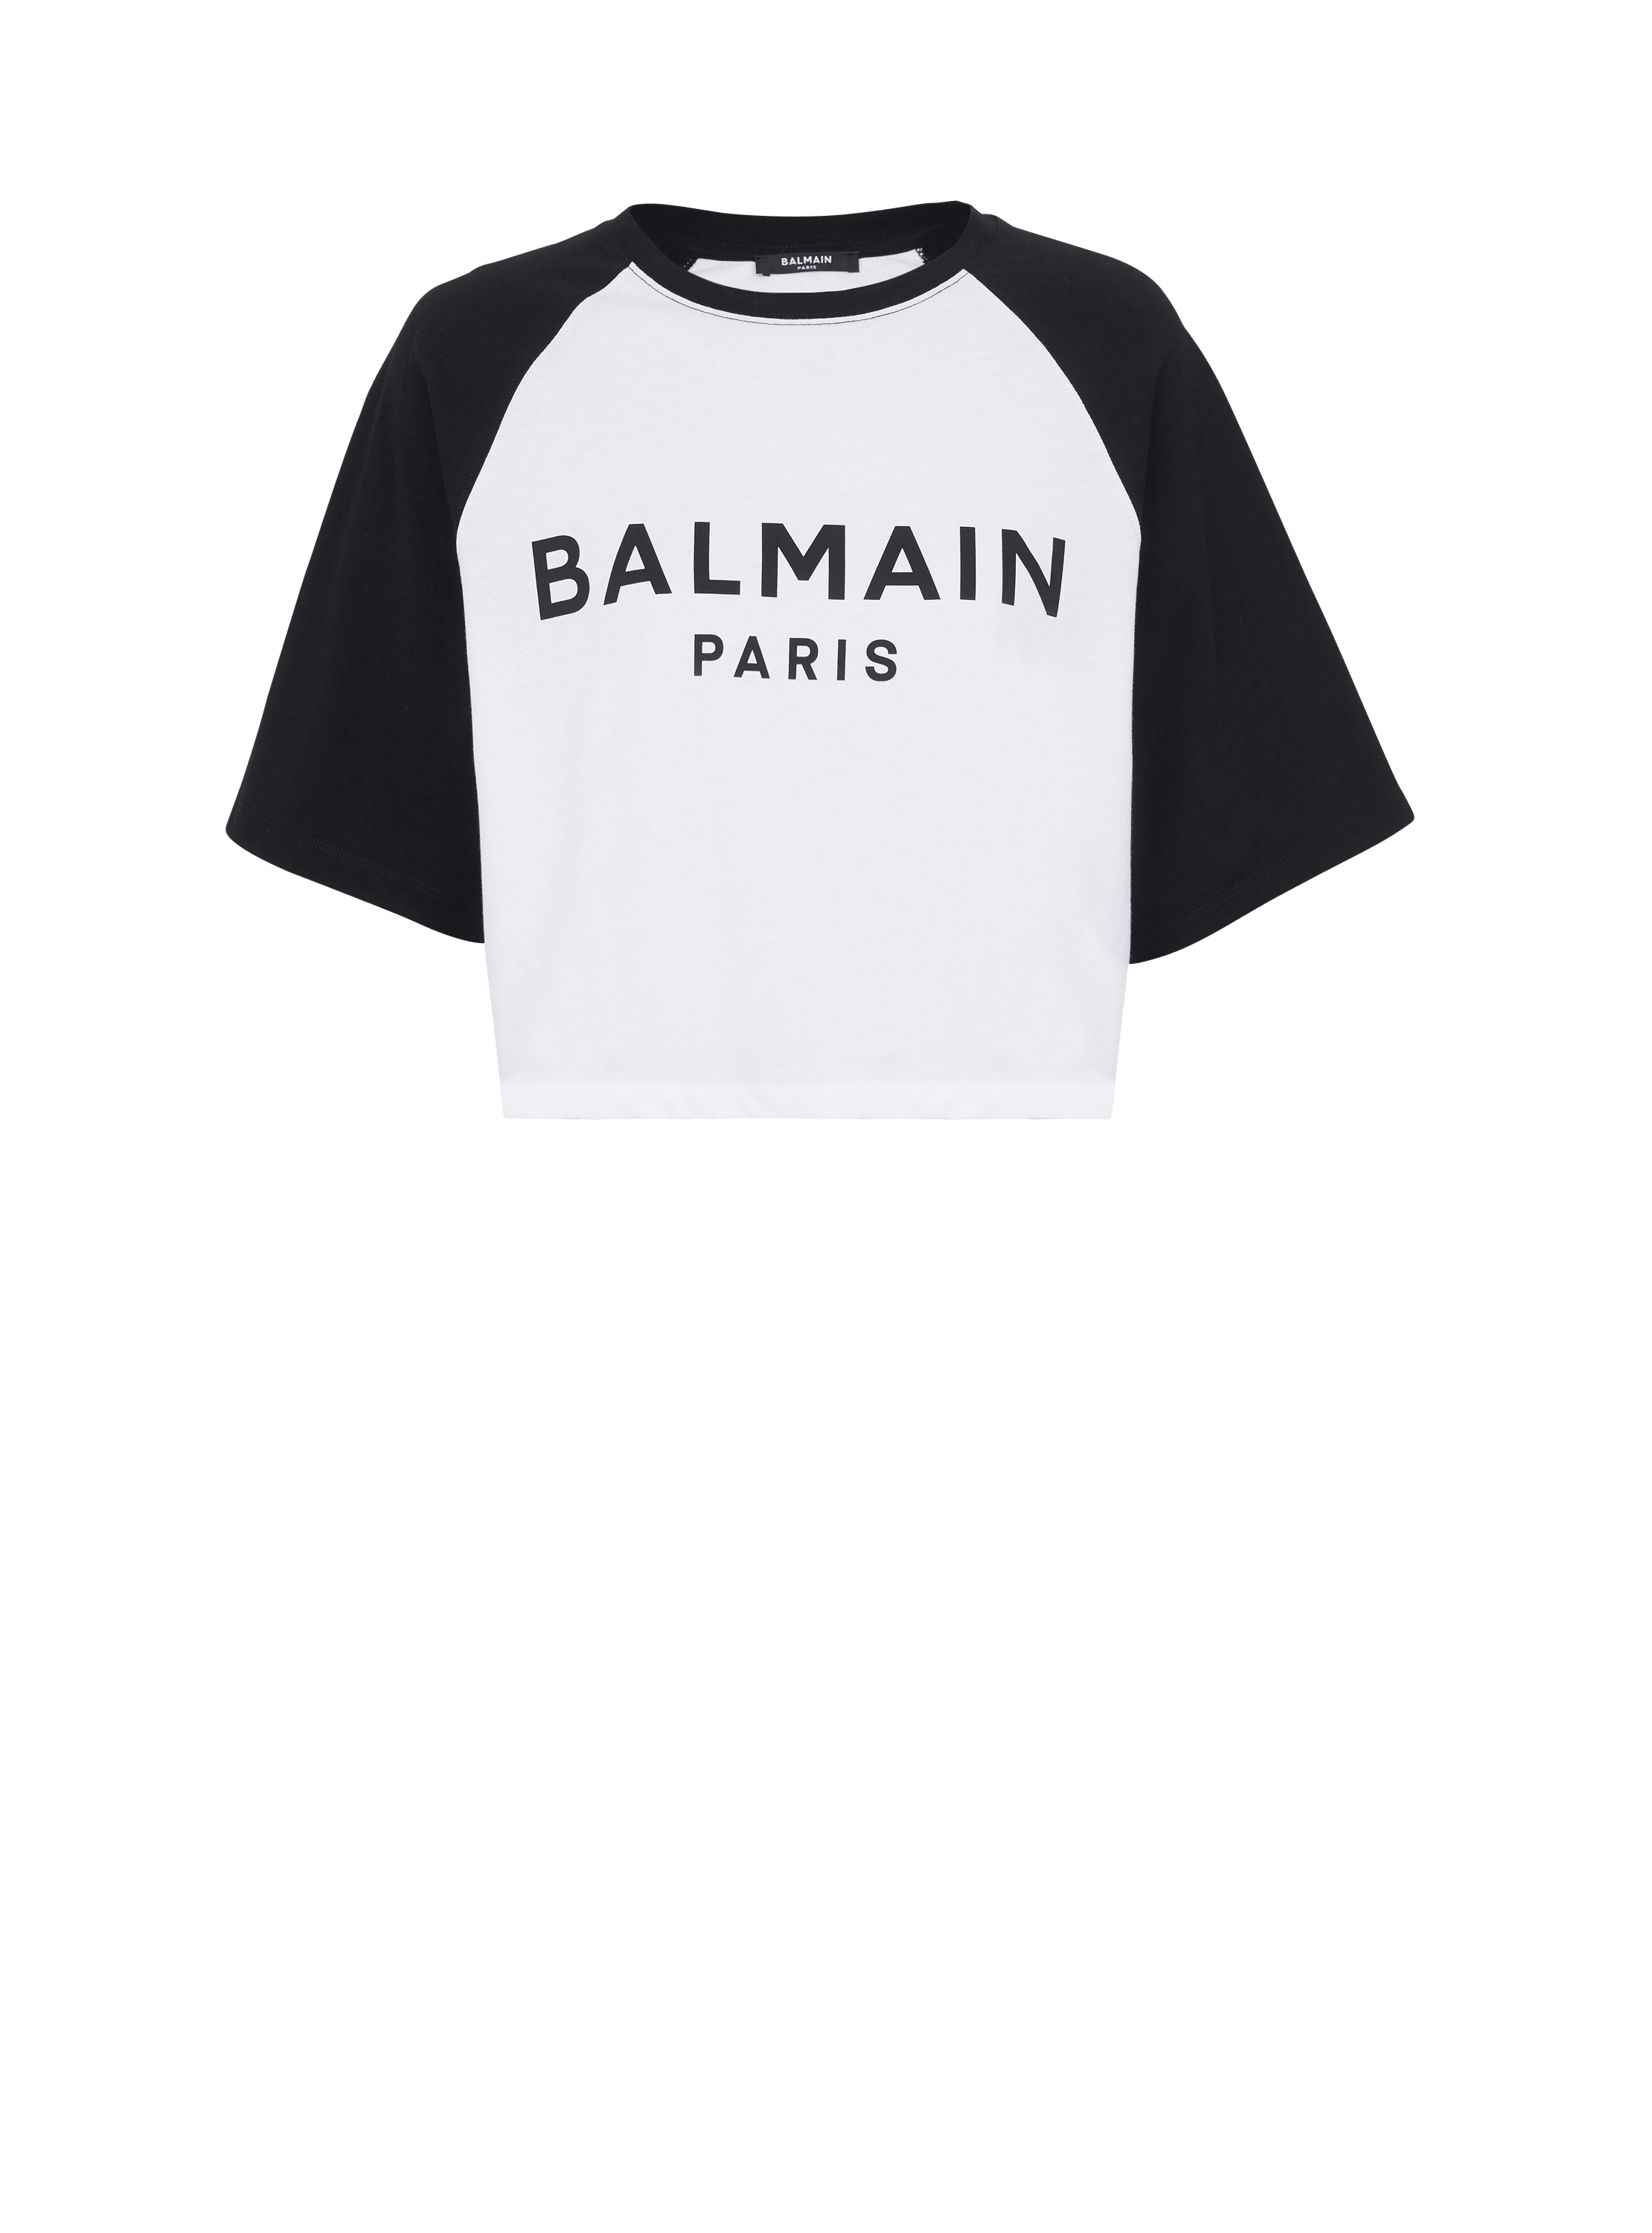 Balmain Paris T-shirt, black, hi-res